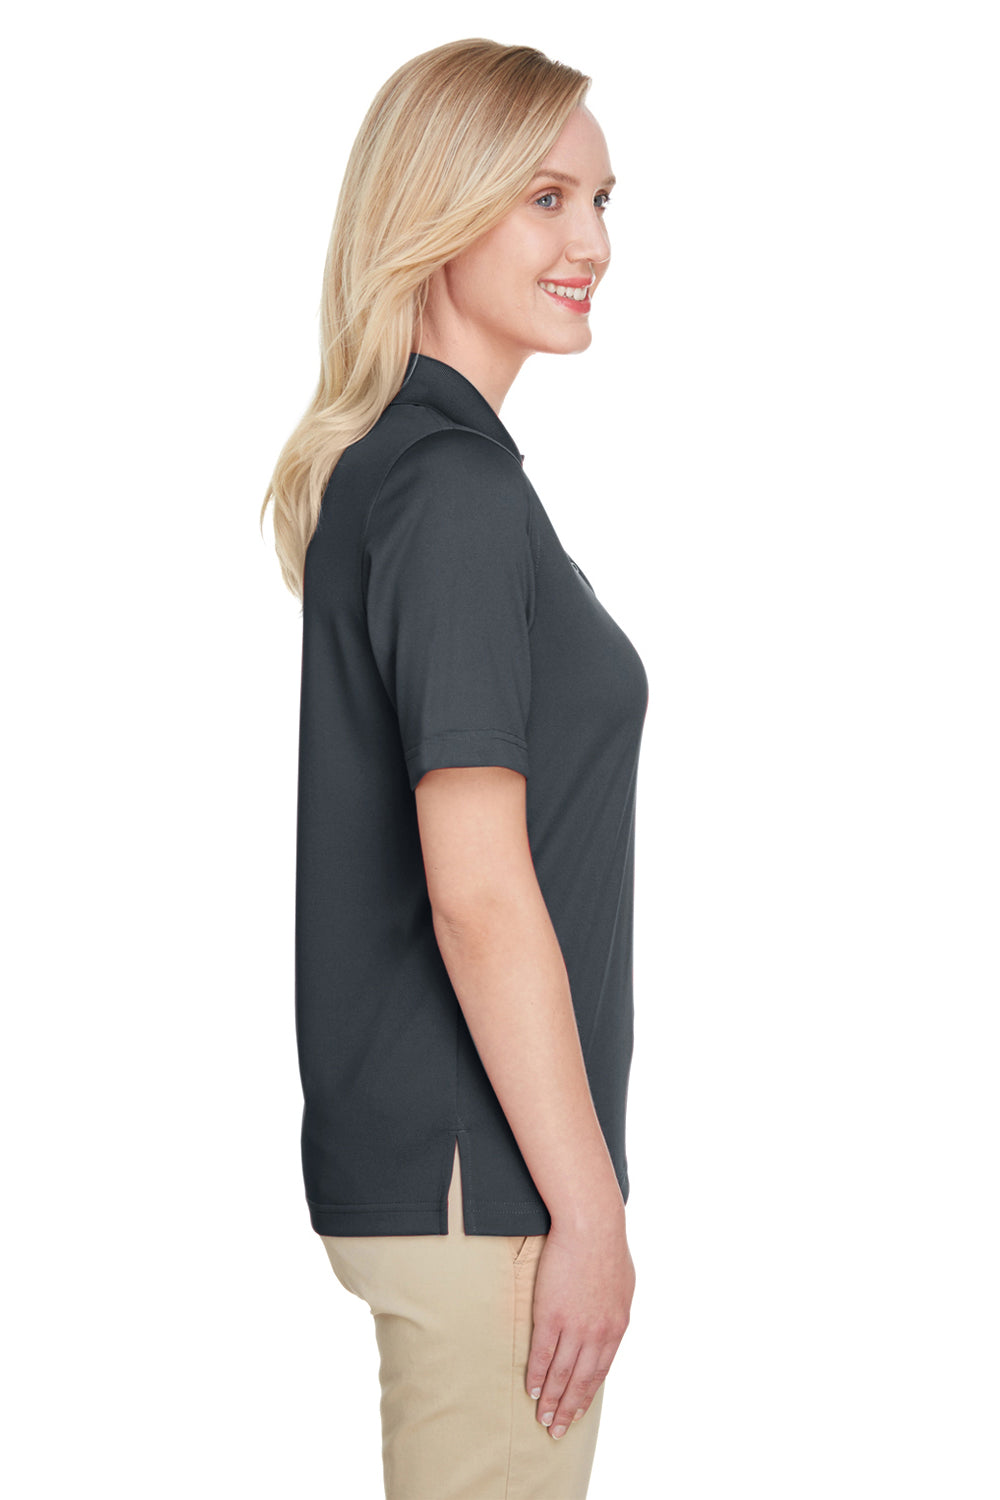 Harriton M348W Womens Advantage Performance Moisture Wicking Short Sleeve Polo Shirt Charcoal Grey Side